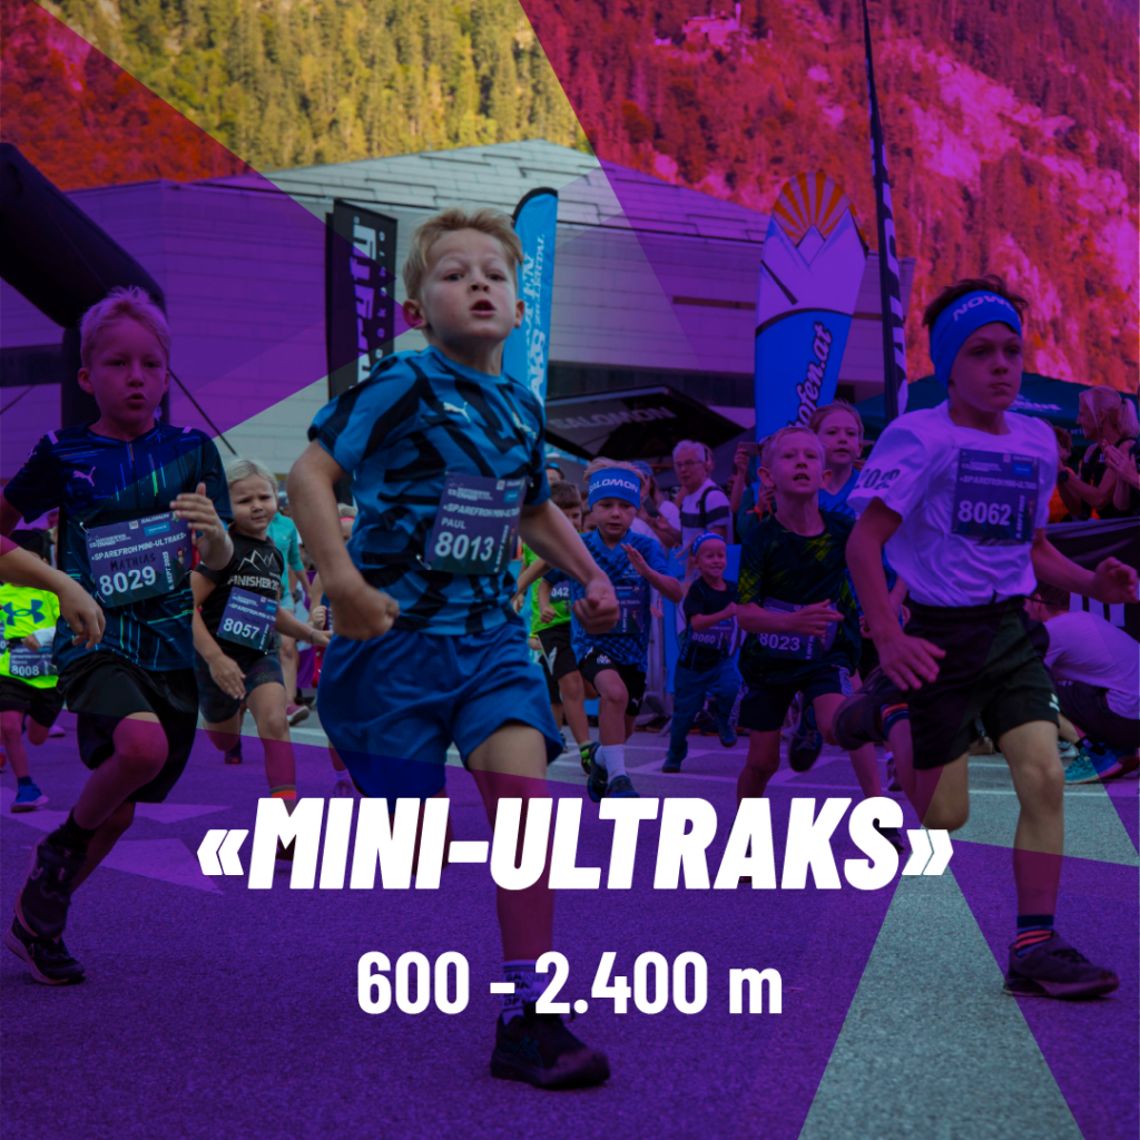 MINI-ULTRAKS - Strecke Mayrhofen Ultraks (mayrhofen.at)